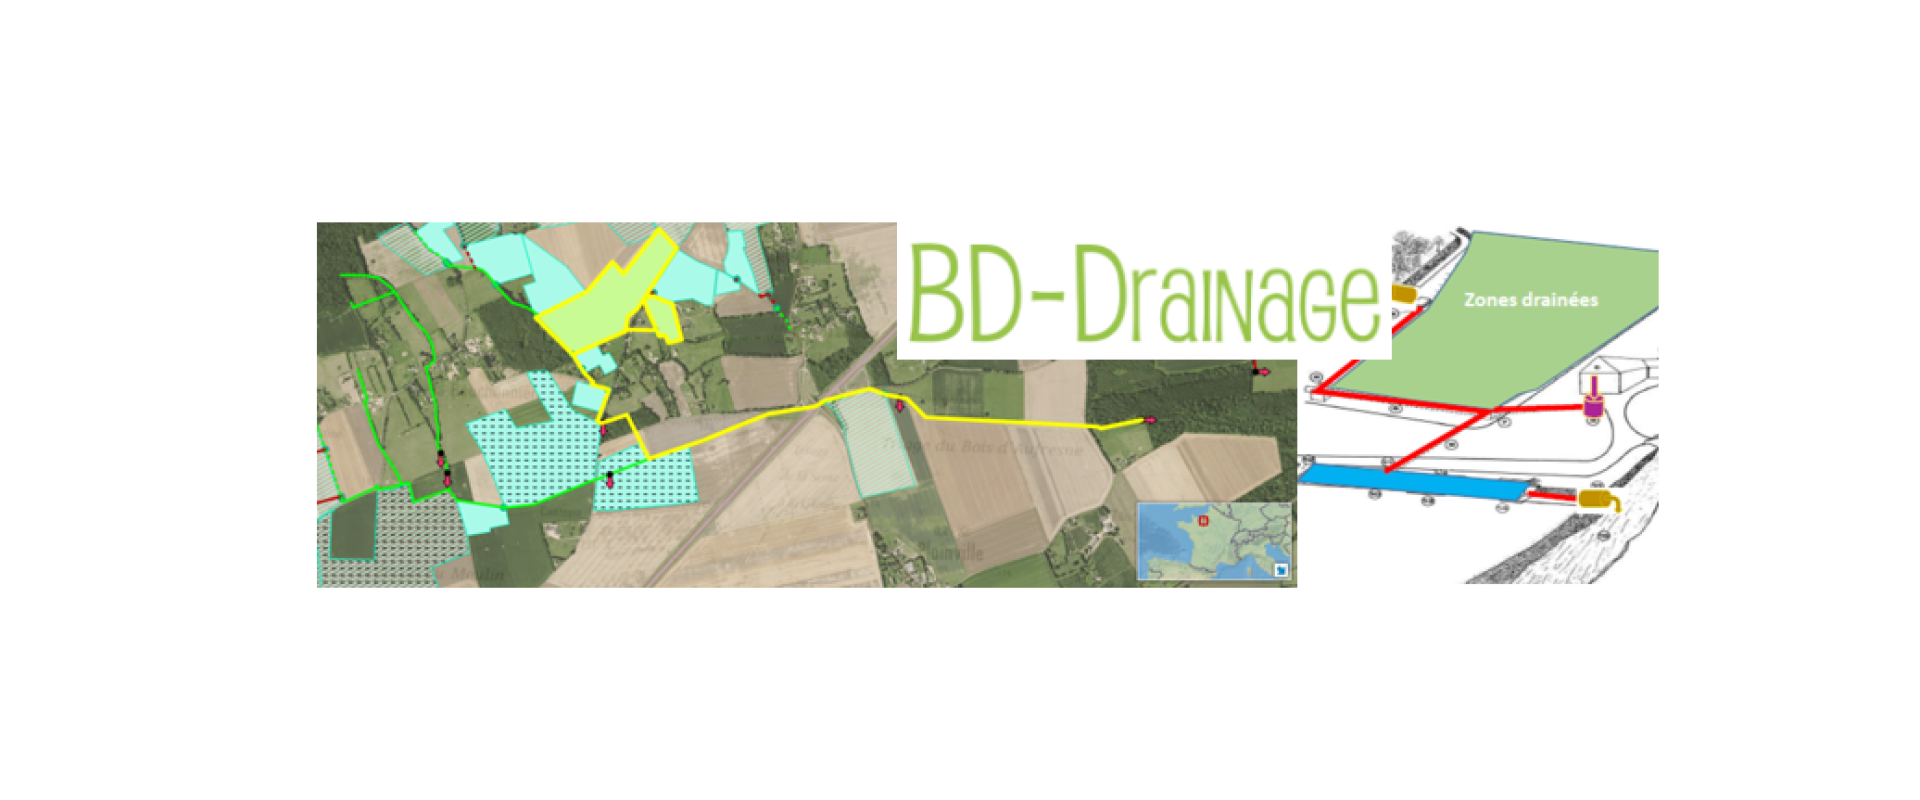 BD-Drainage National